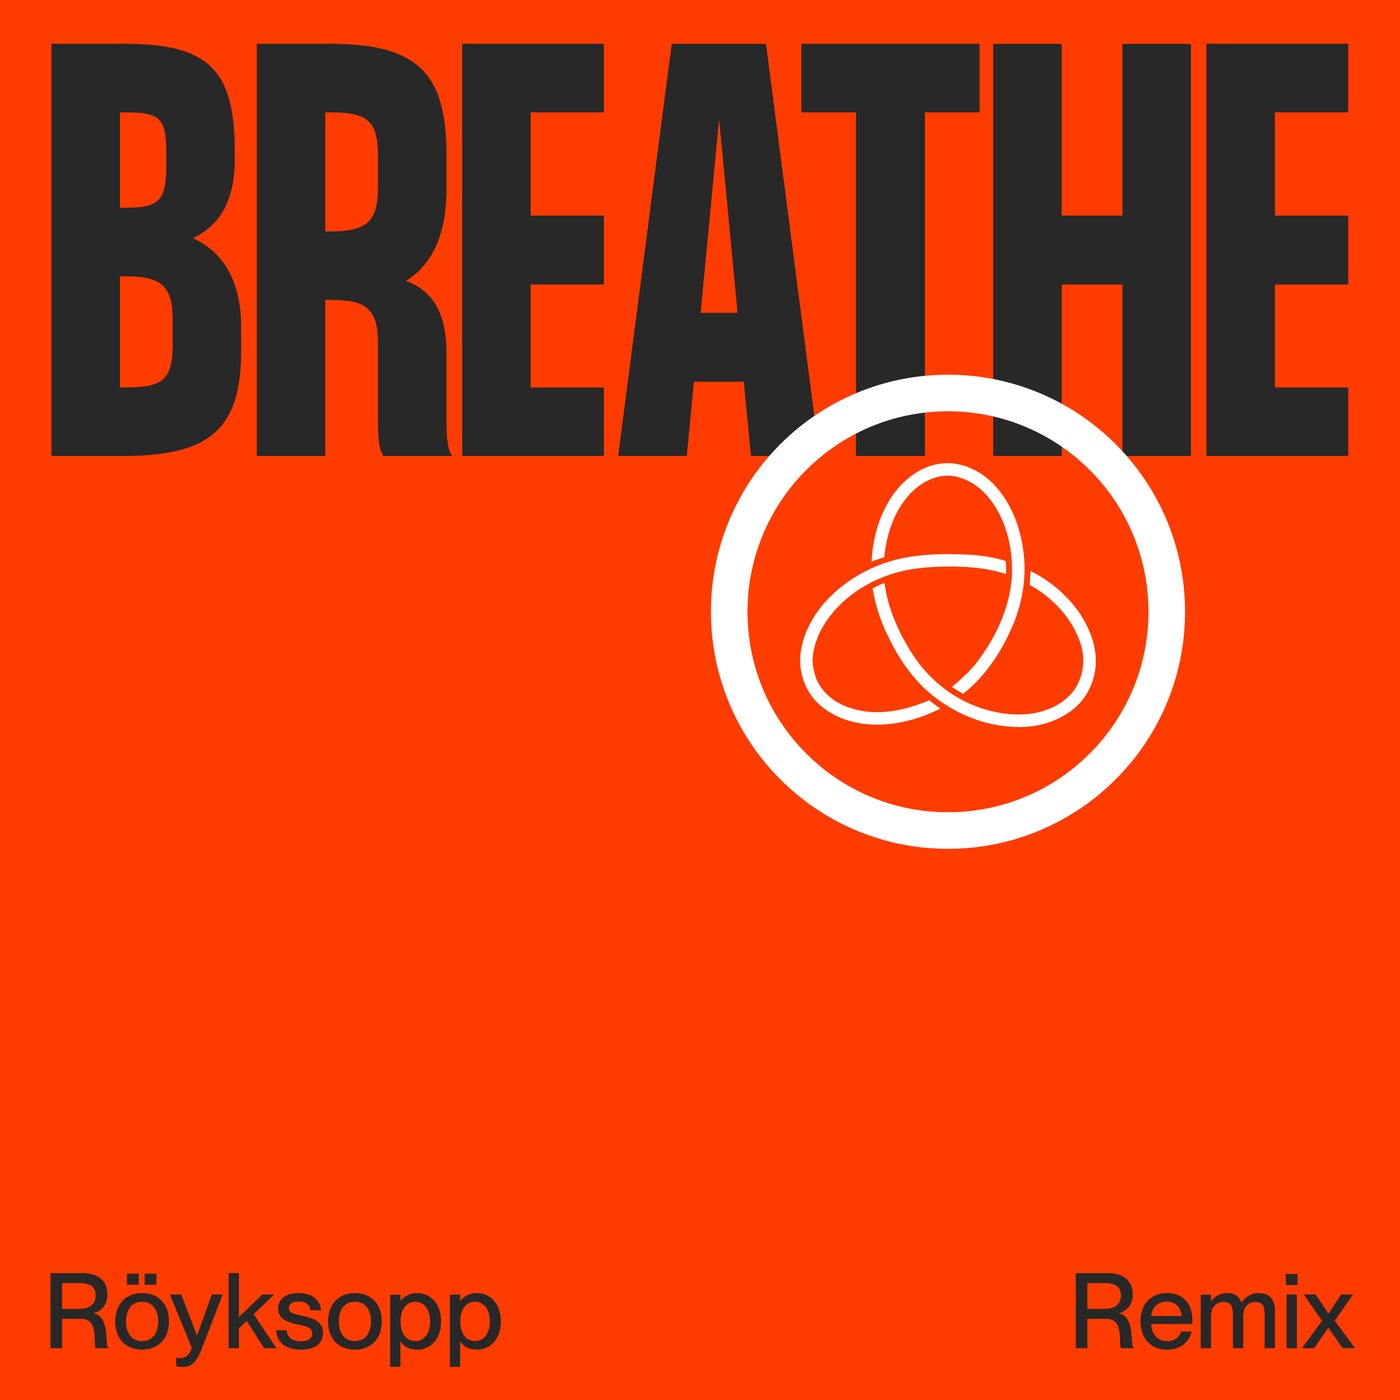 Royksopp - Breathe Feat. Astrid S (Royksopp Remix)